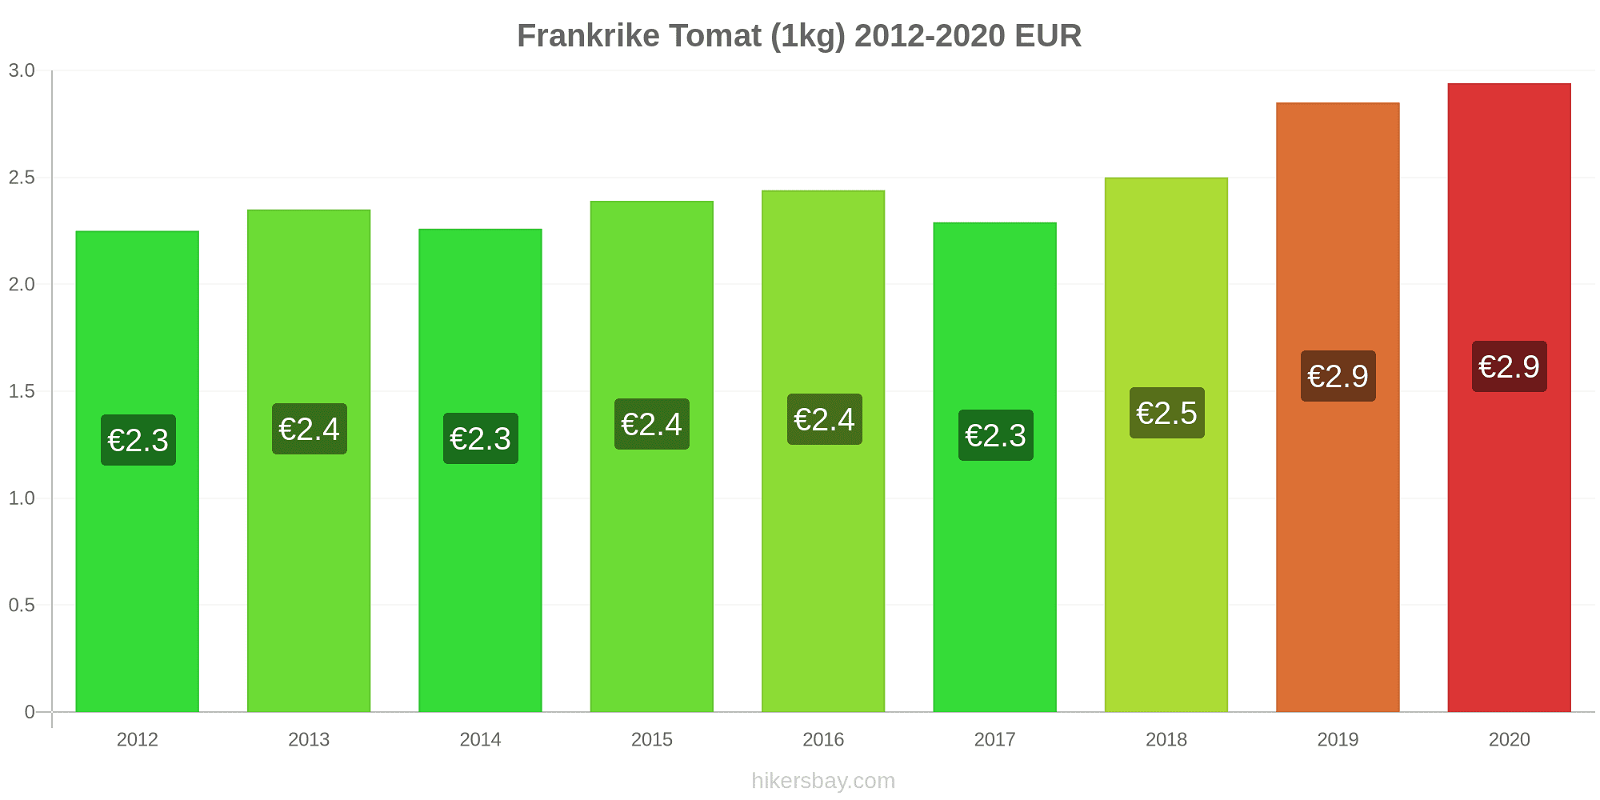 Frankrike prisendringer Tomat (1kg) hikersbay.com